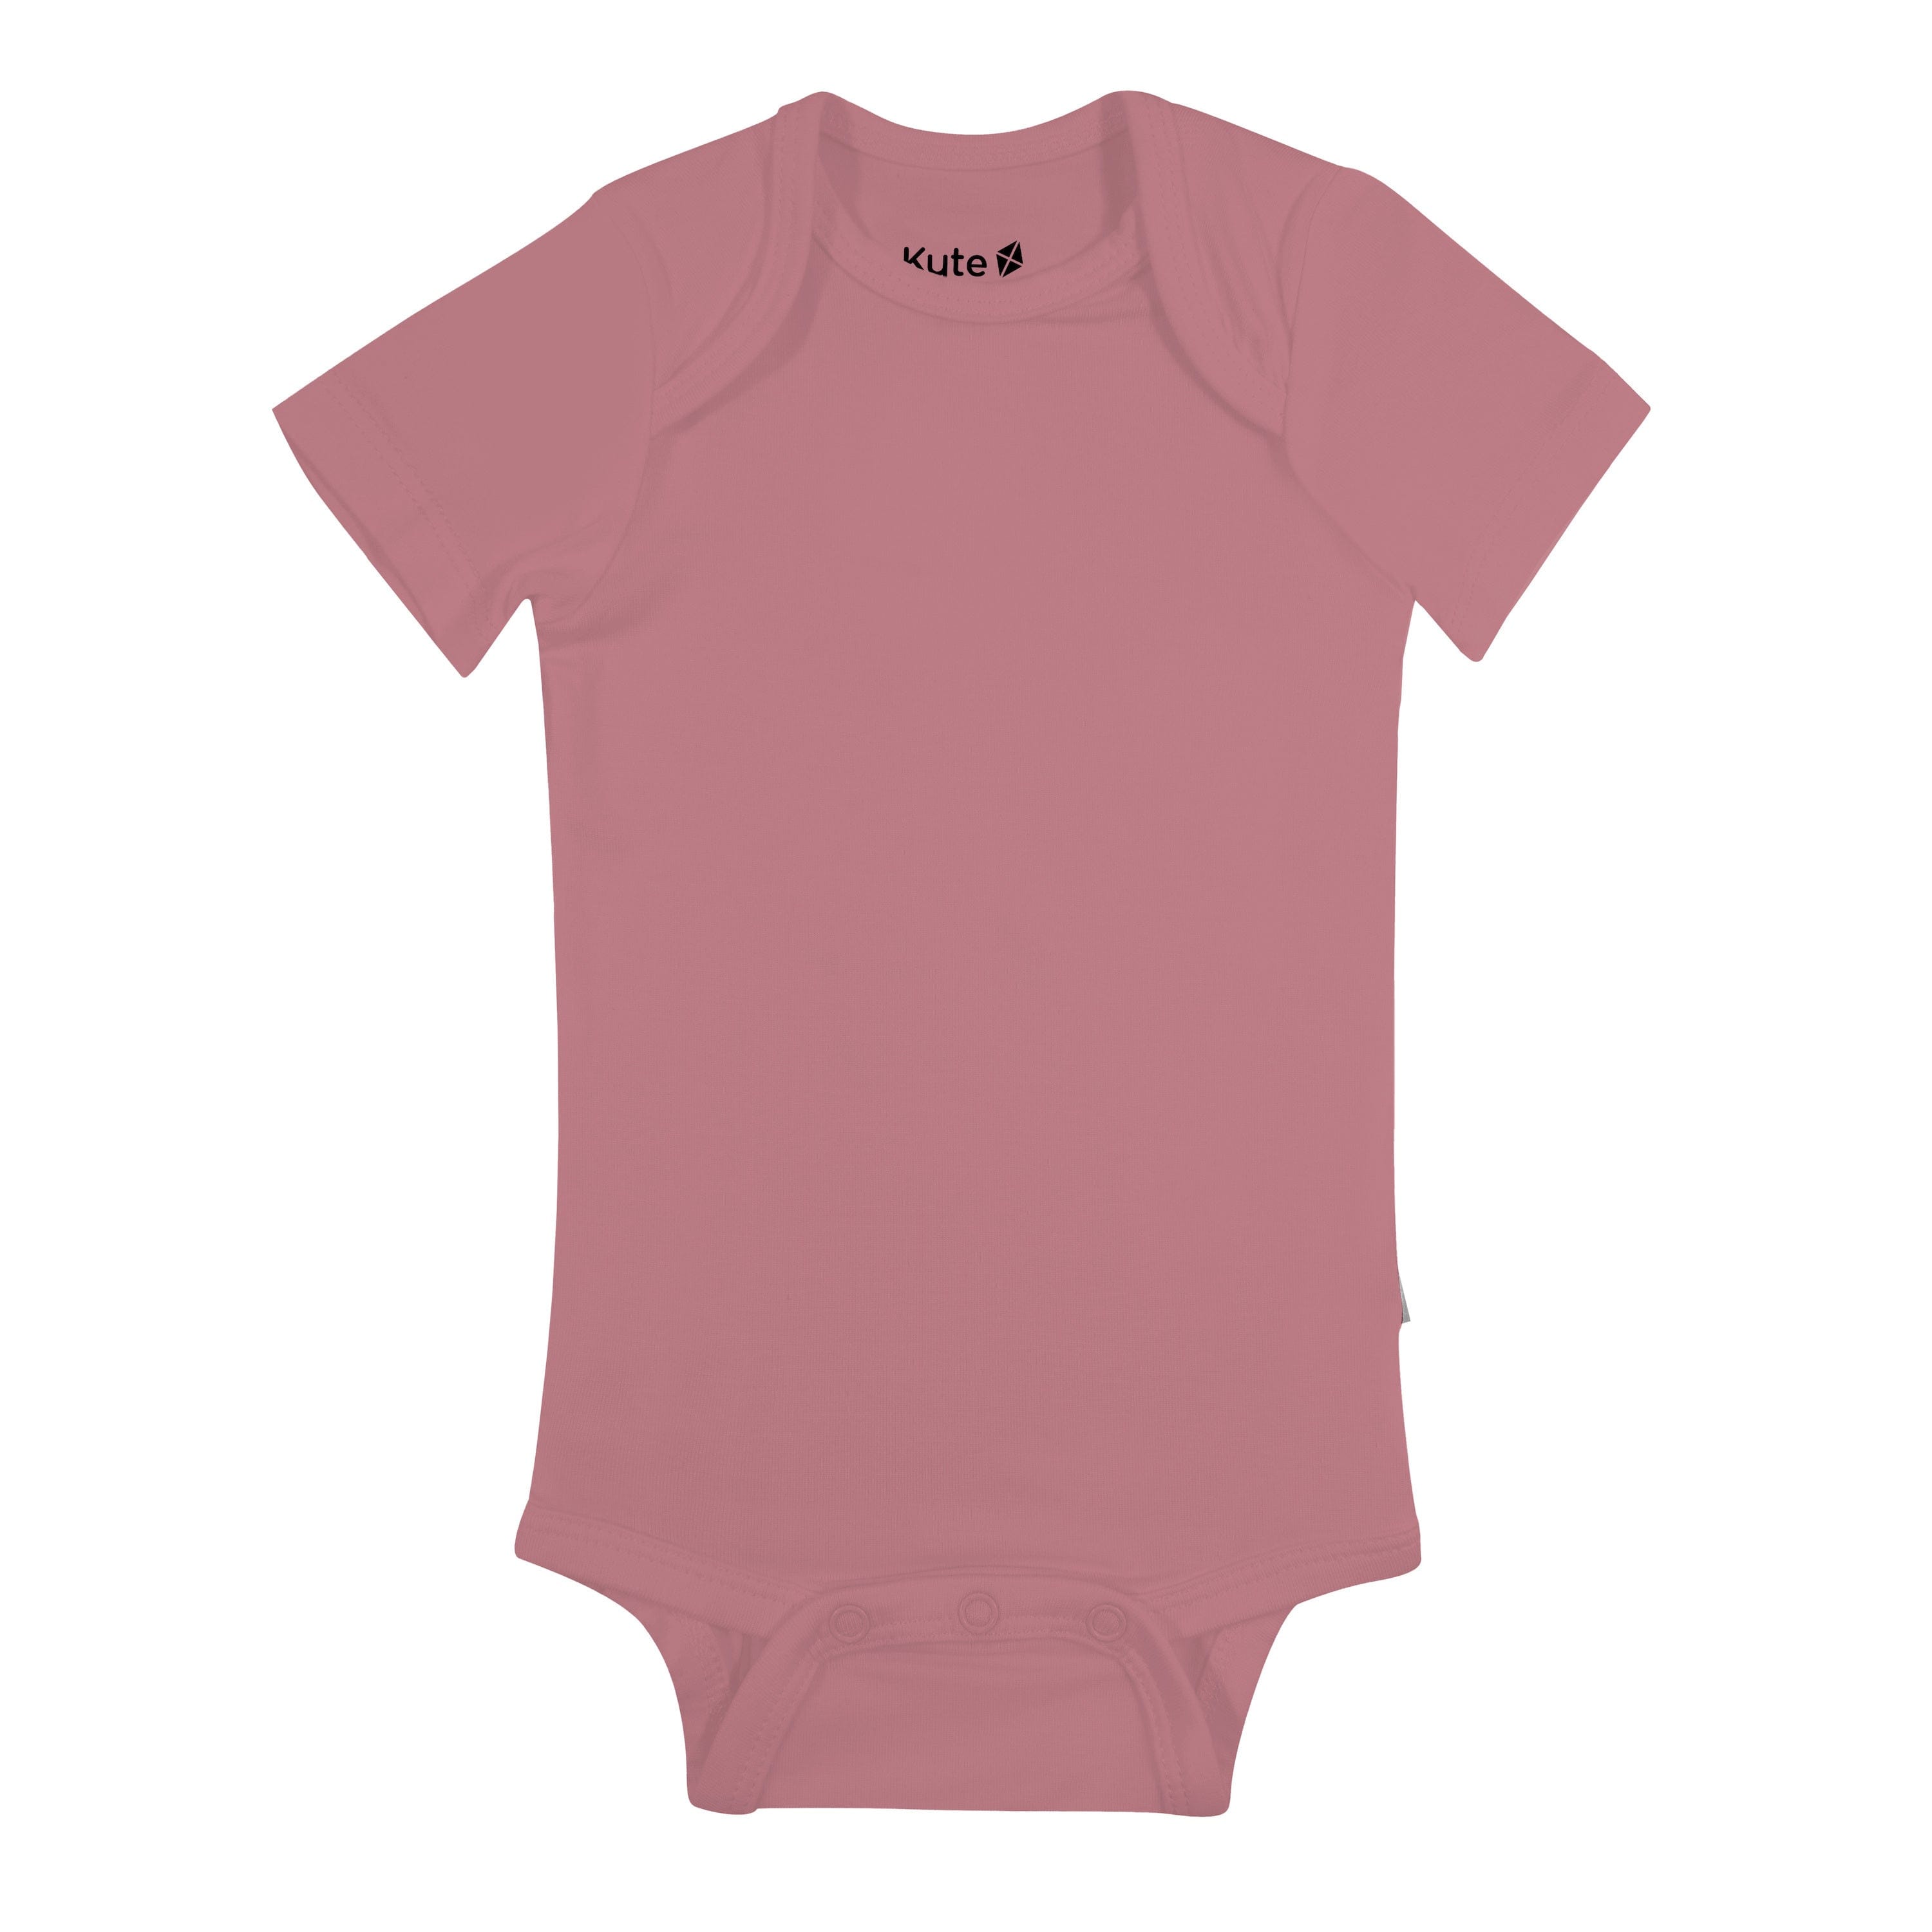 Kyte Baby Short Sleeve Bodysuits Bodysuit in Dusty Rose